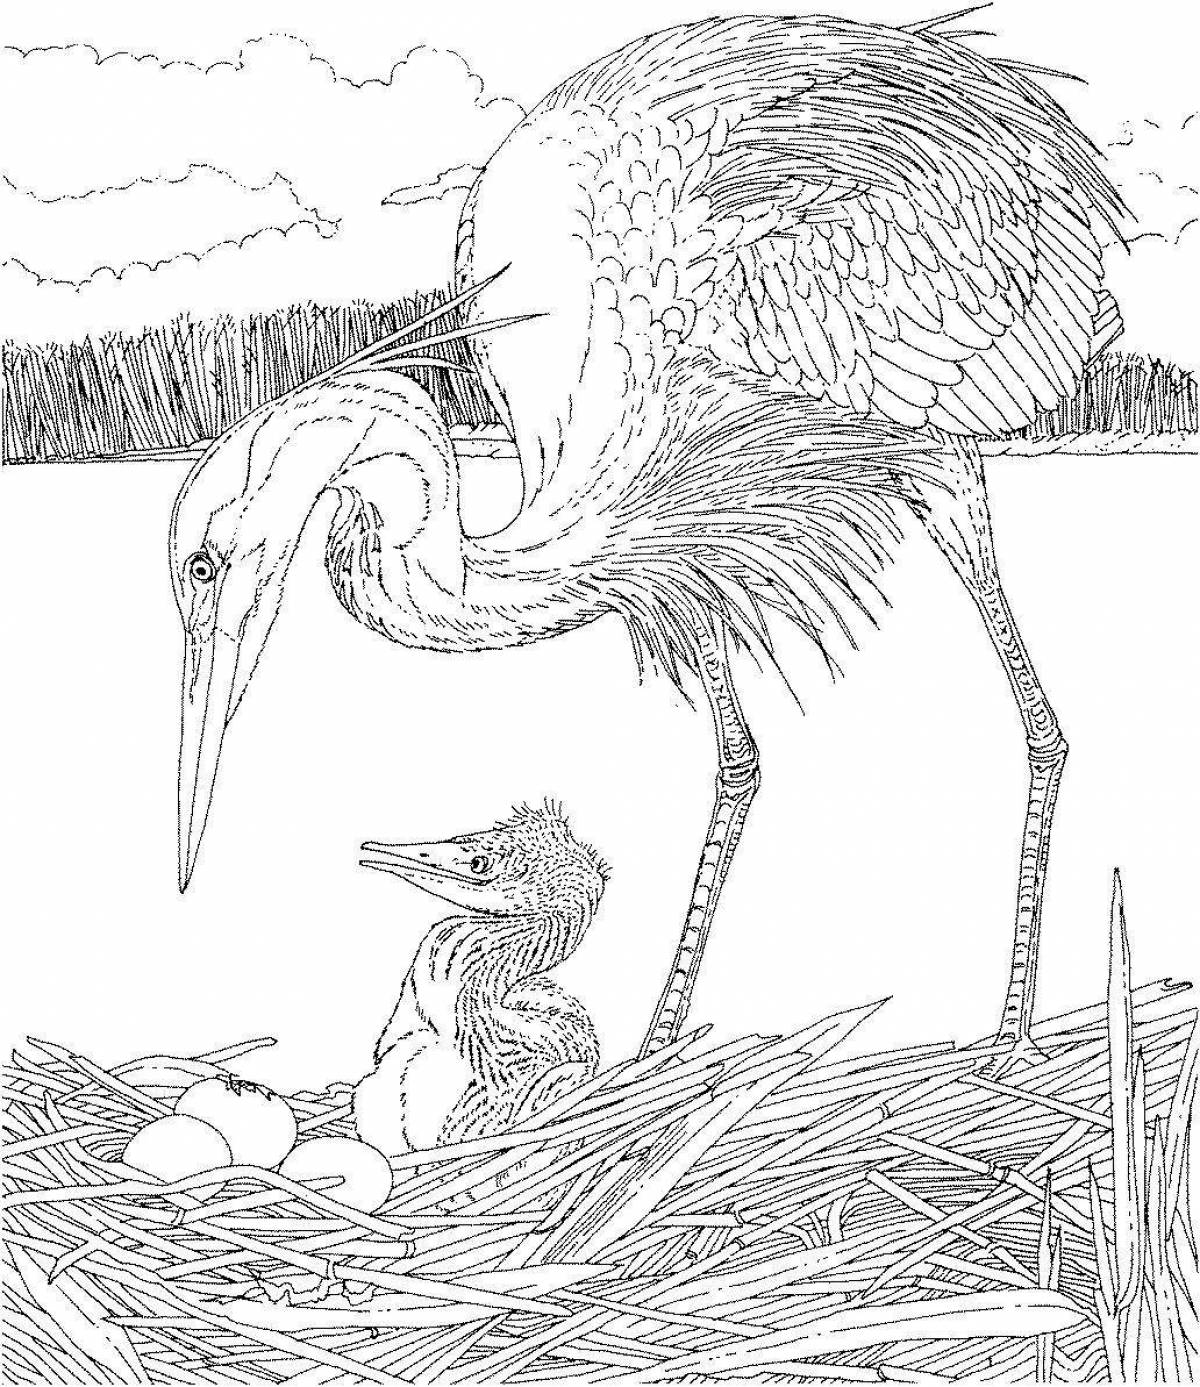 Heron and crane #8